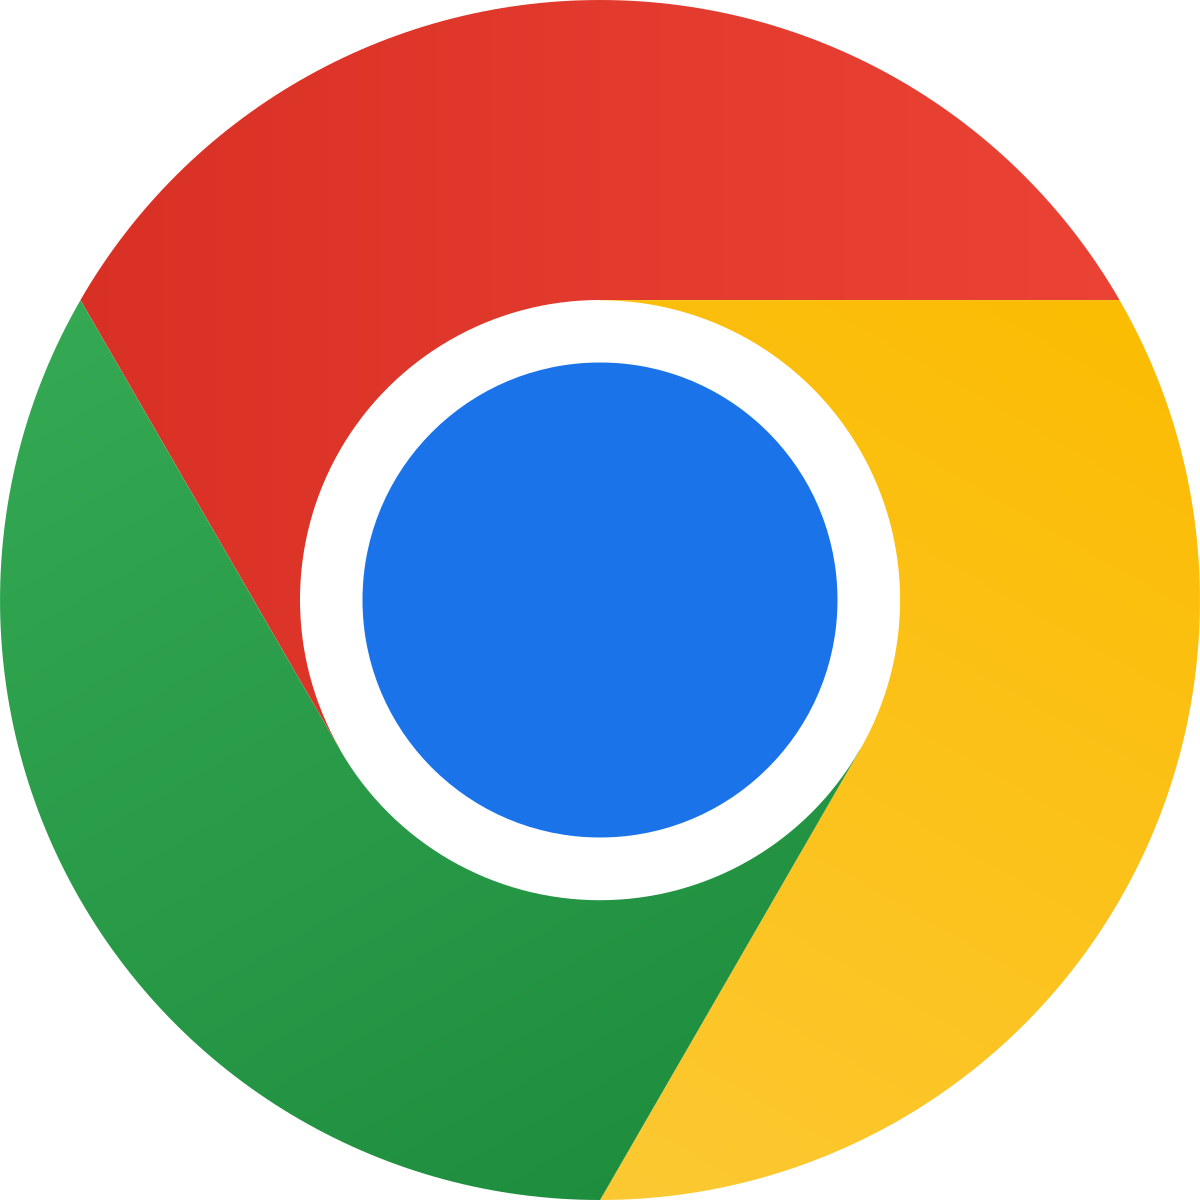 Different web browser icons (e.g. Chrome, Firefox, Safari)